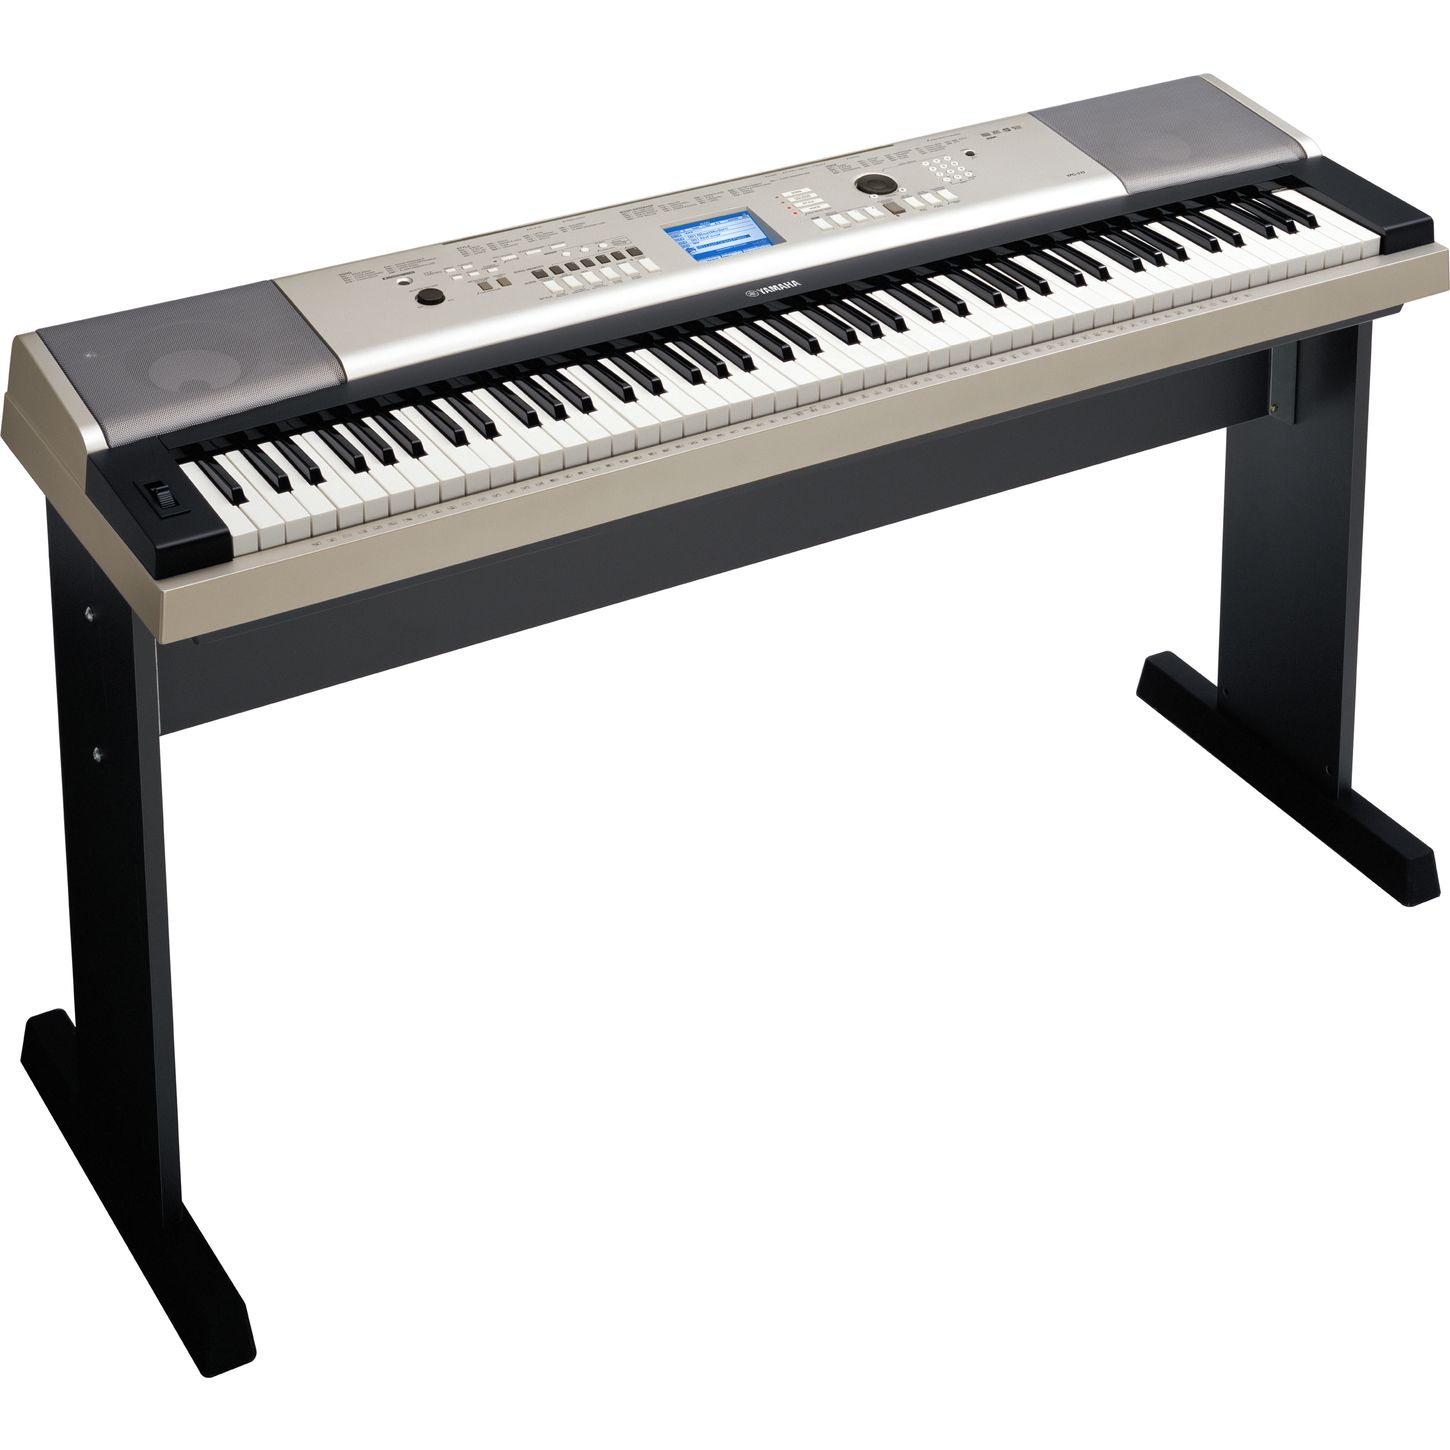 Ypg 535 88 Key Portable Grand Piano Keyboard   Musician S Friend